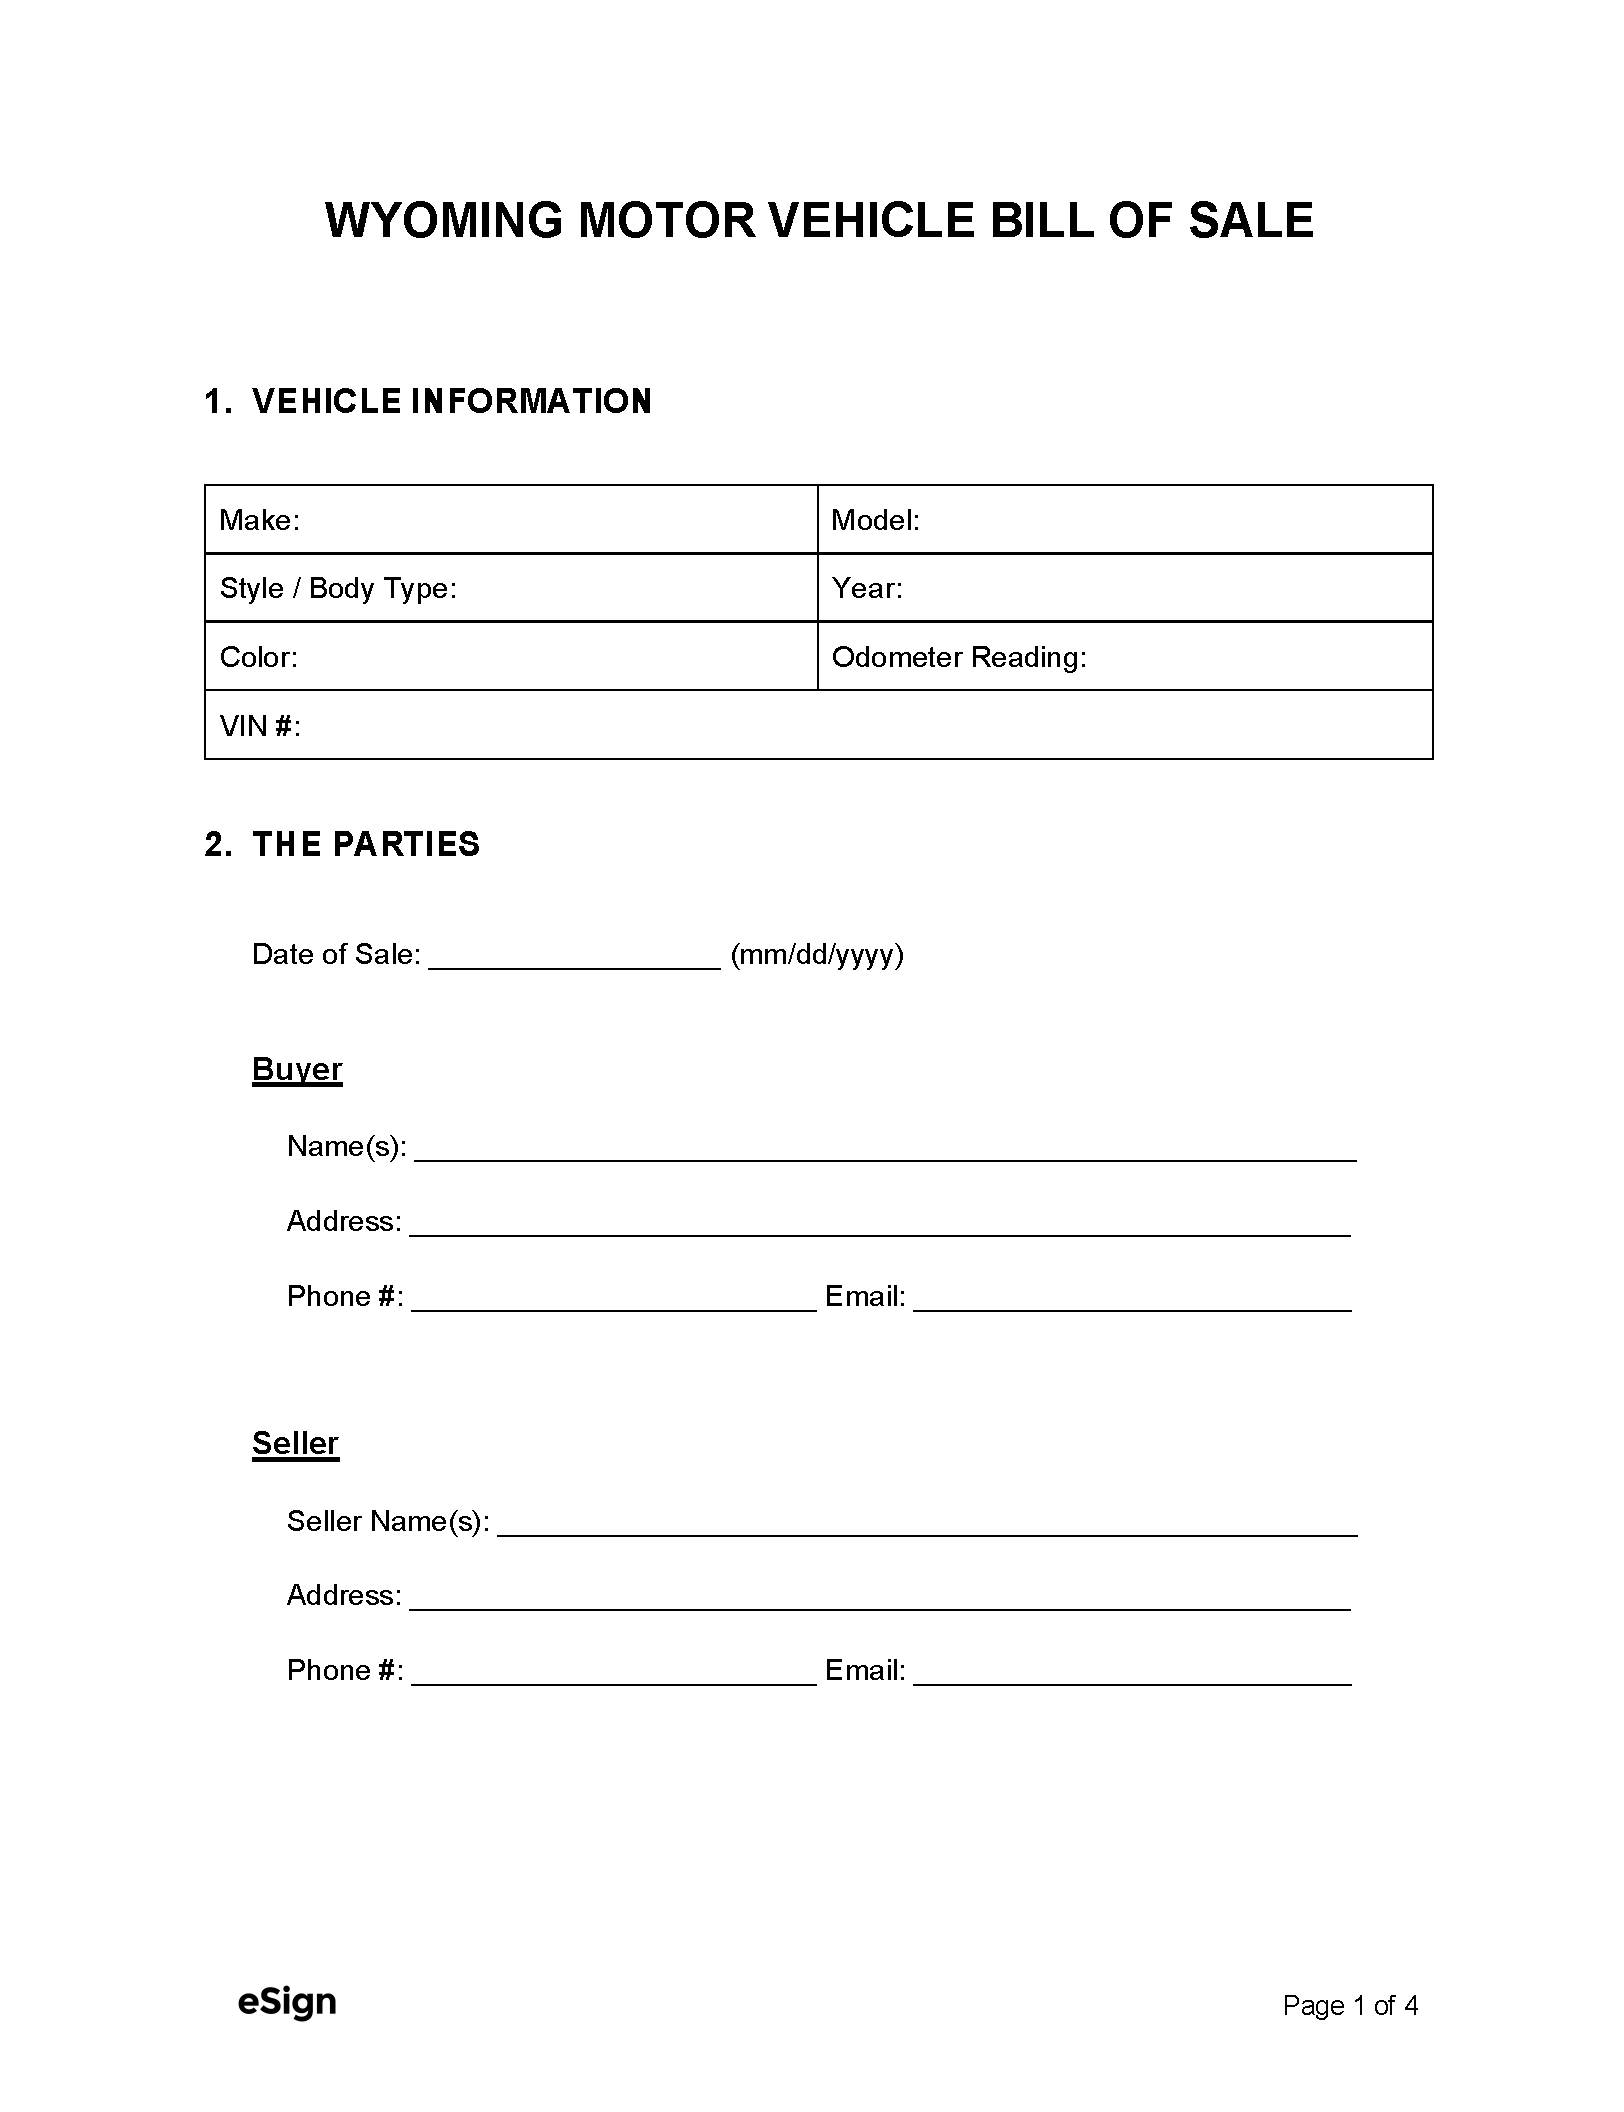 Free Wyoming Motor Vehicle Bill of Sale Form - PDF | Word